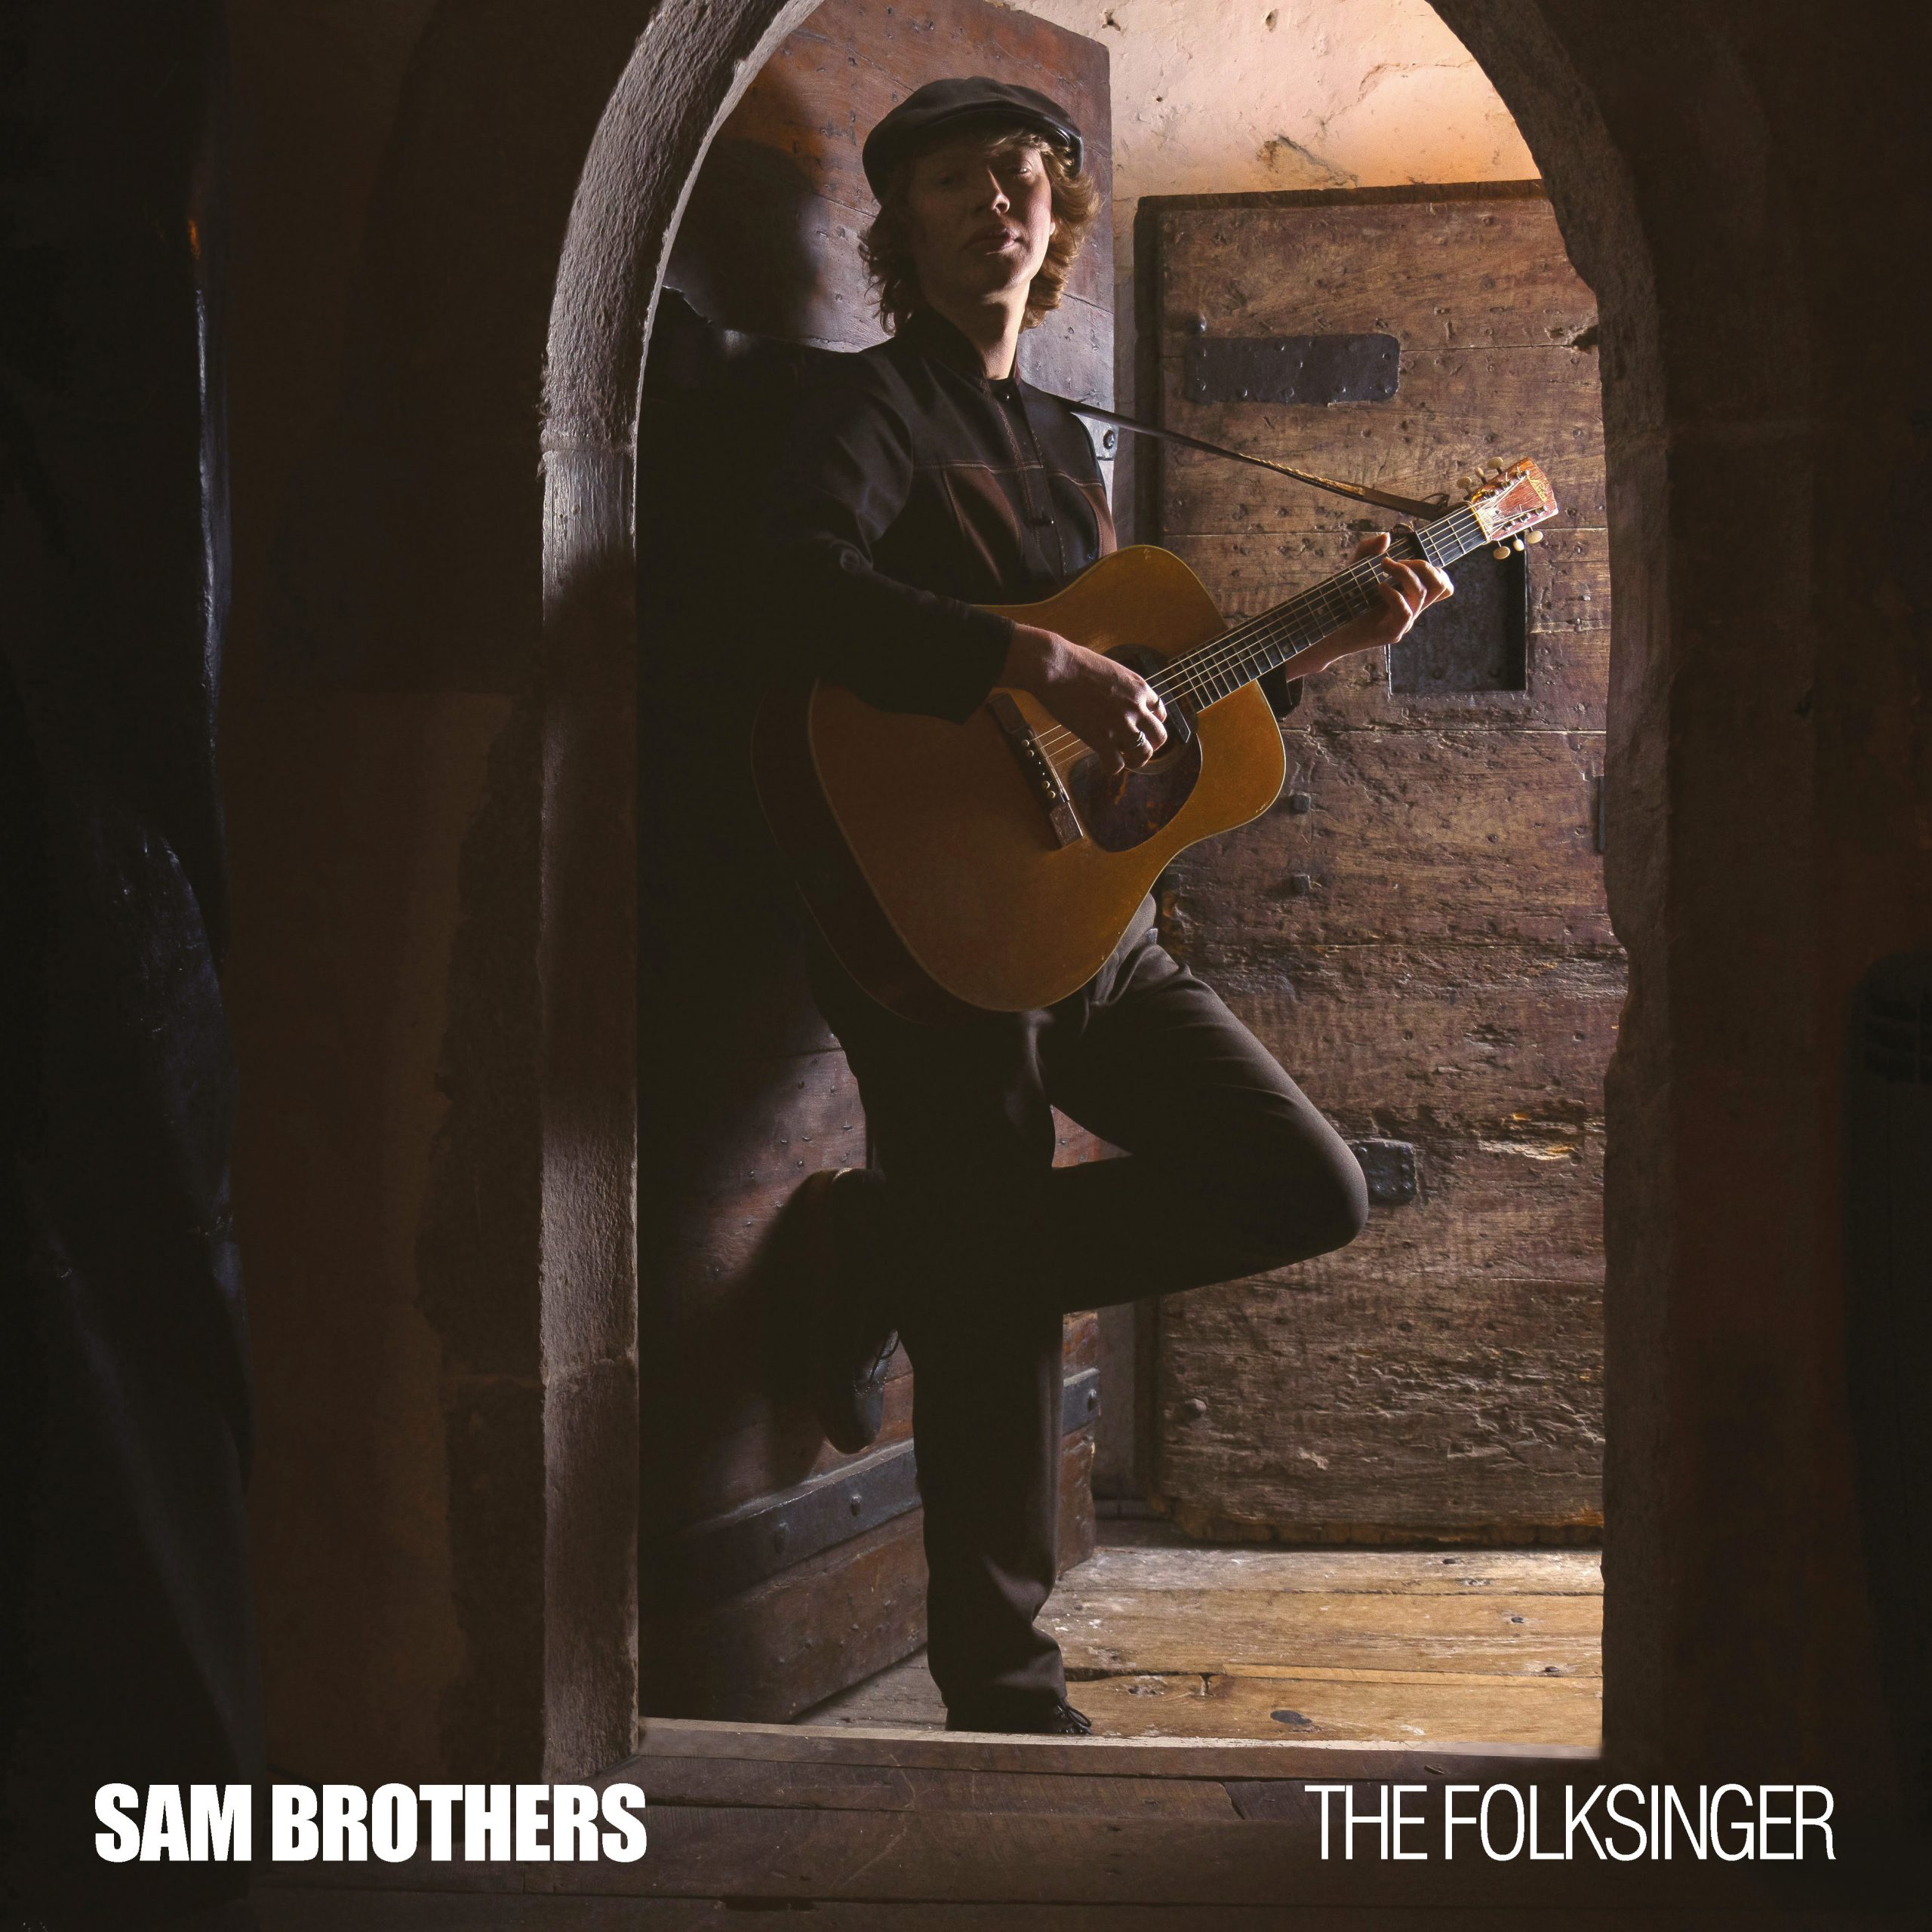 Sam Brothers’ ‘Through The Dark’ Earns Prime Spot on Our Daily A-List Playlist